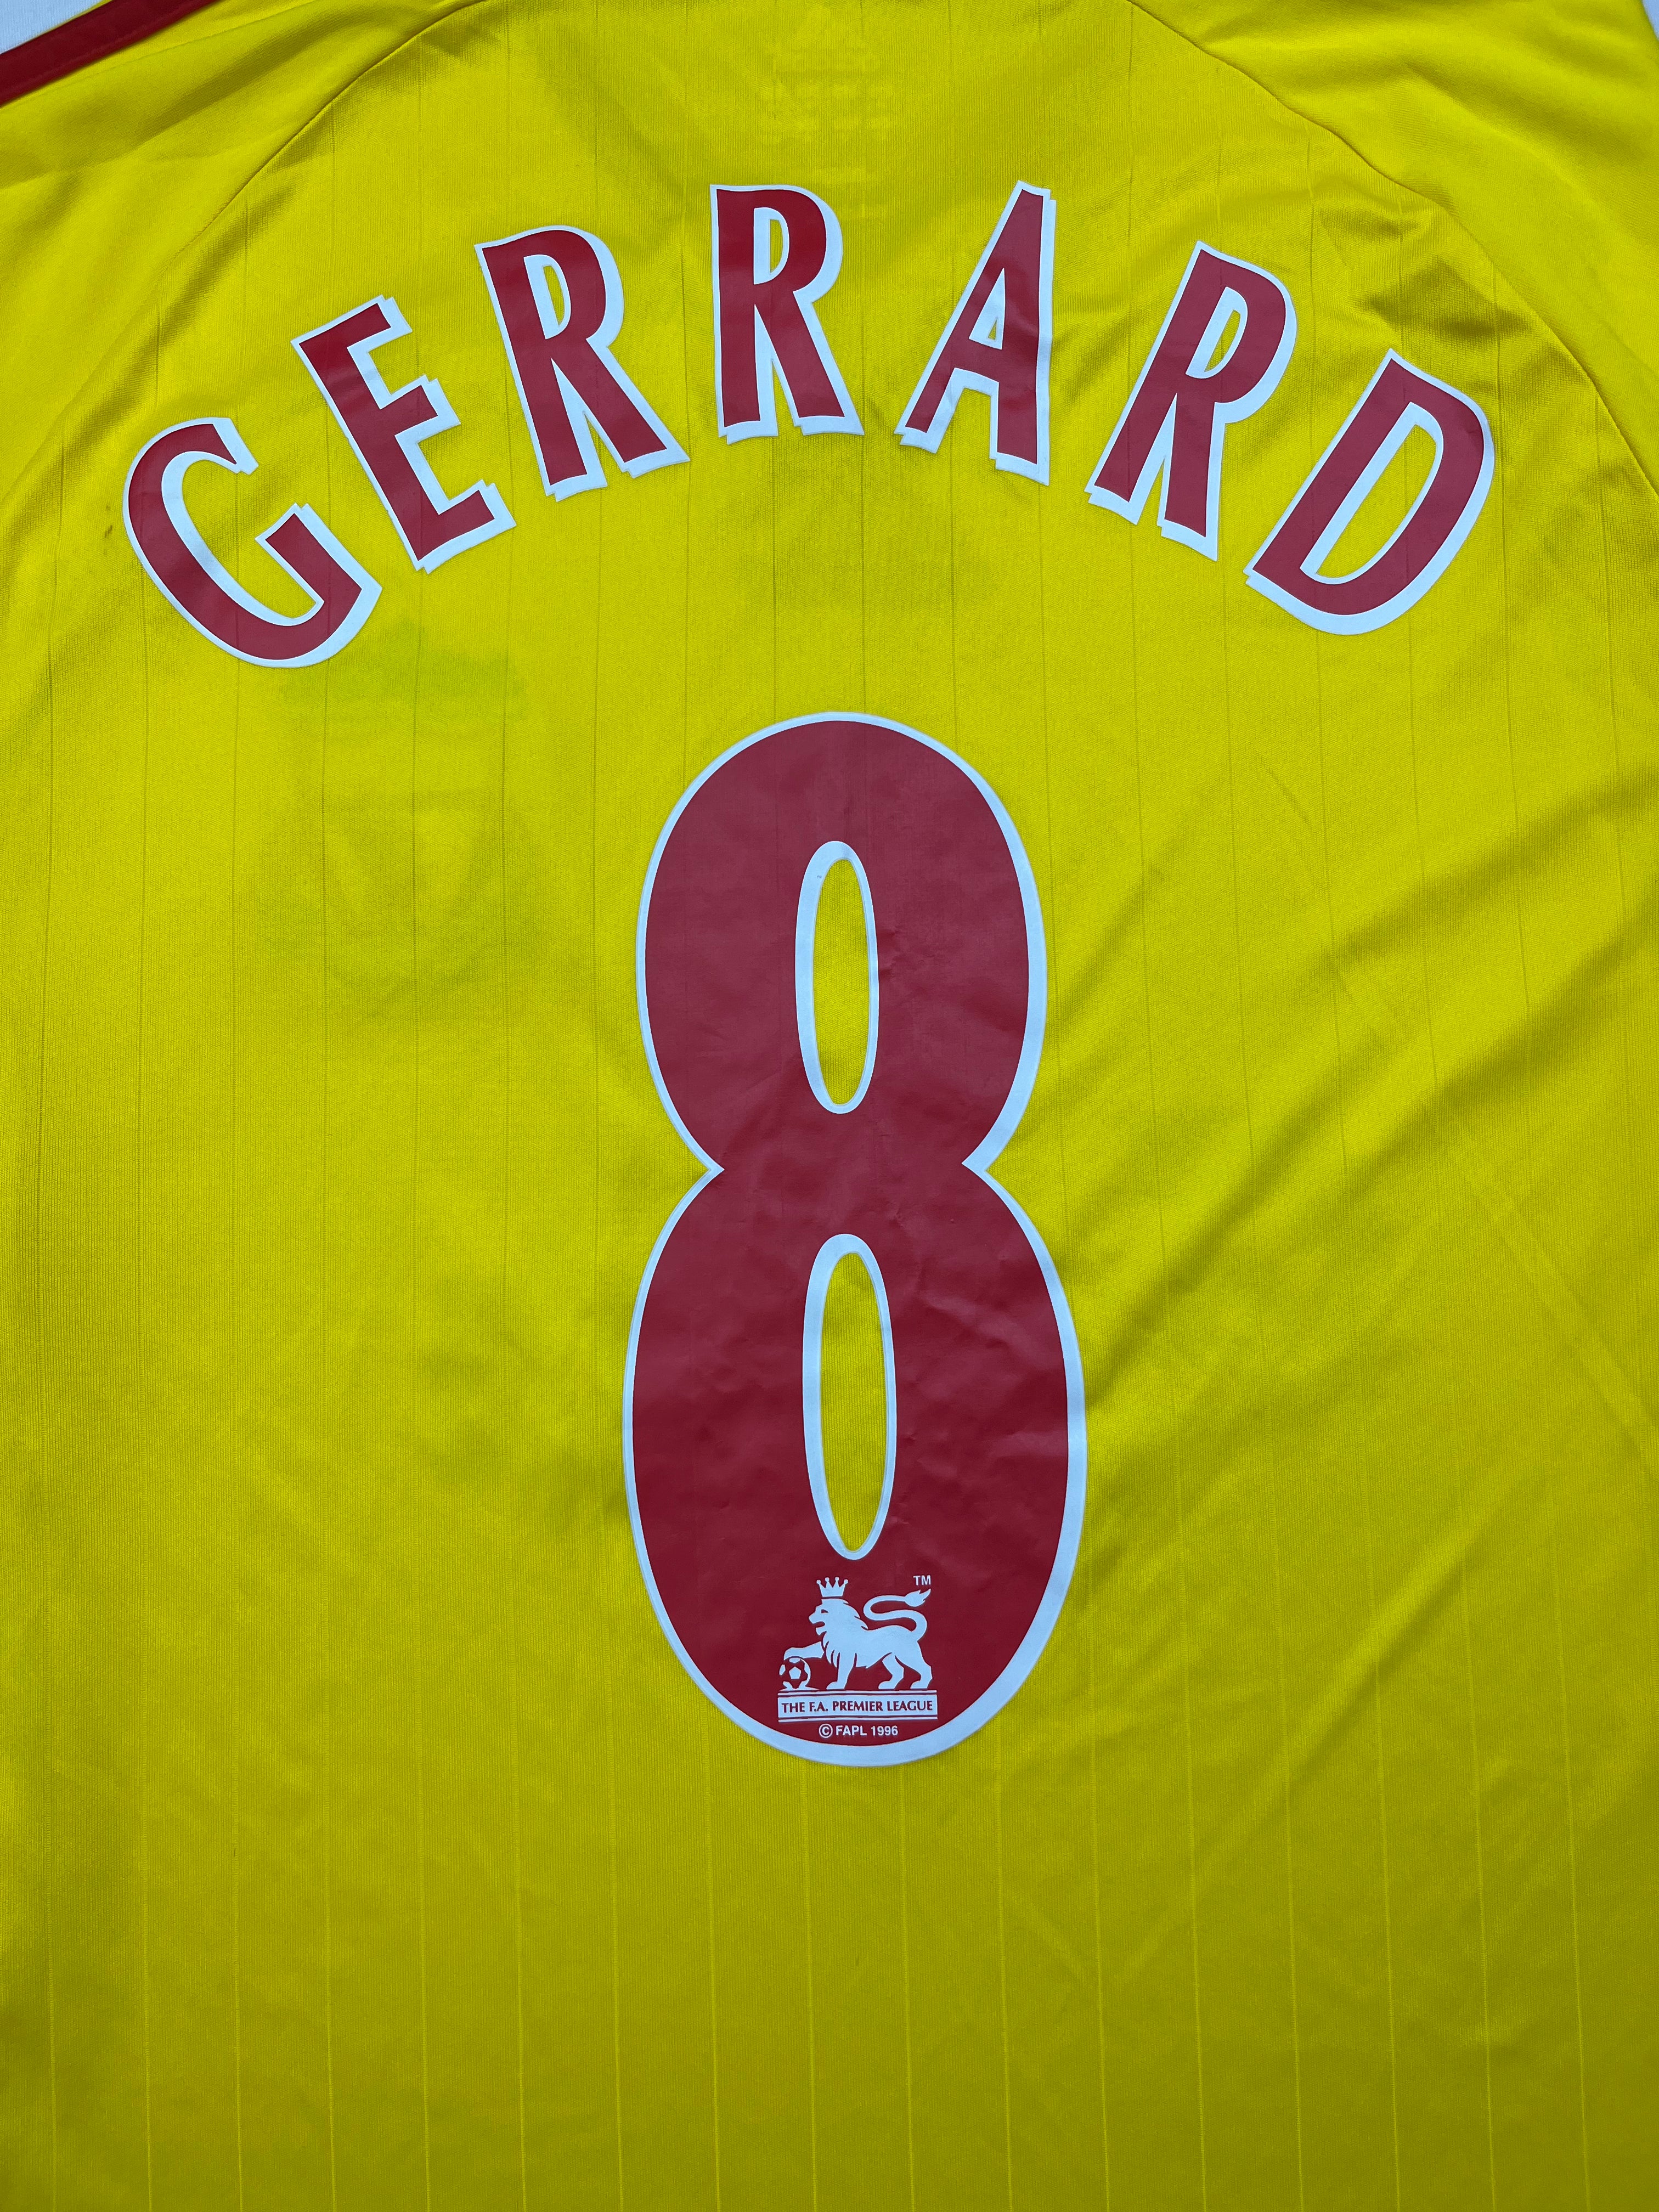 Maillot extérieur Liverpool 2006/07 Gerrard #8 (M) 8.5/10